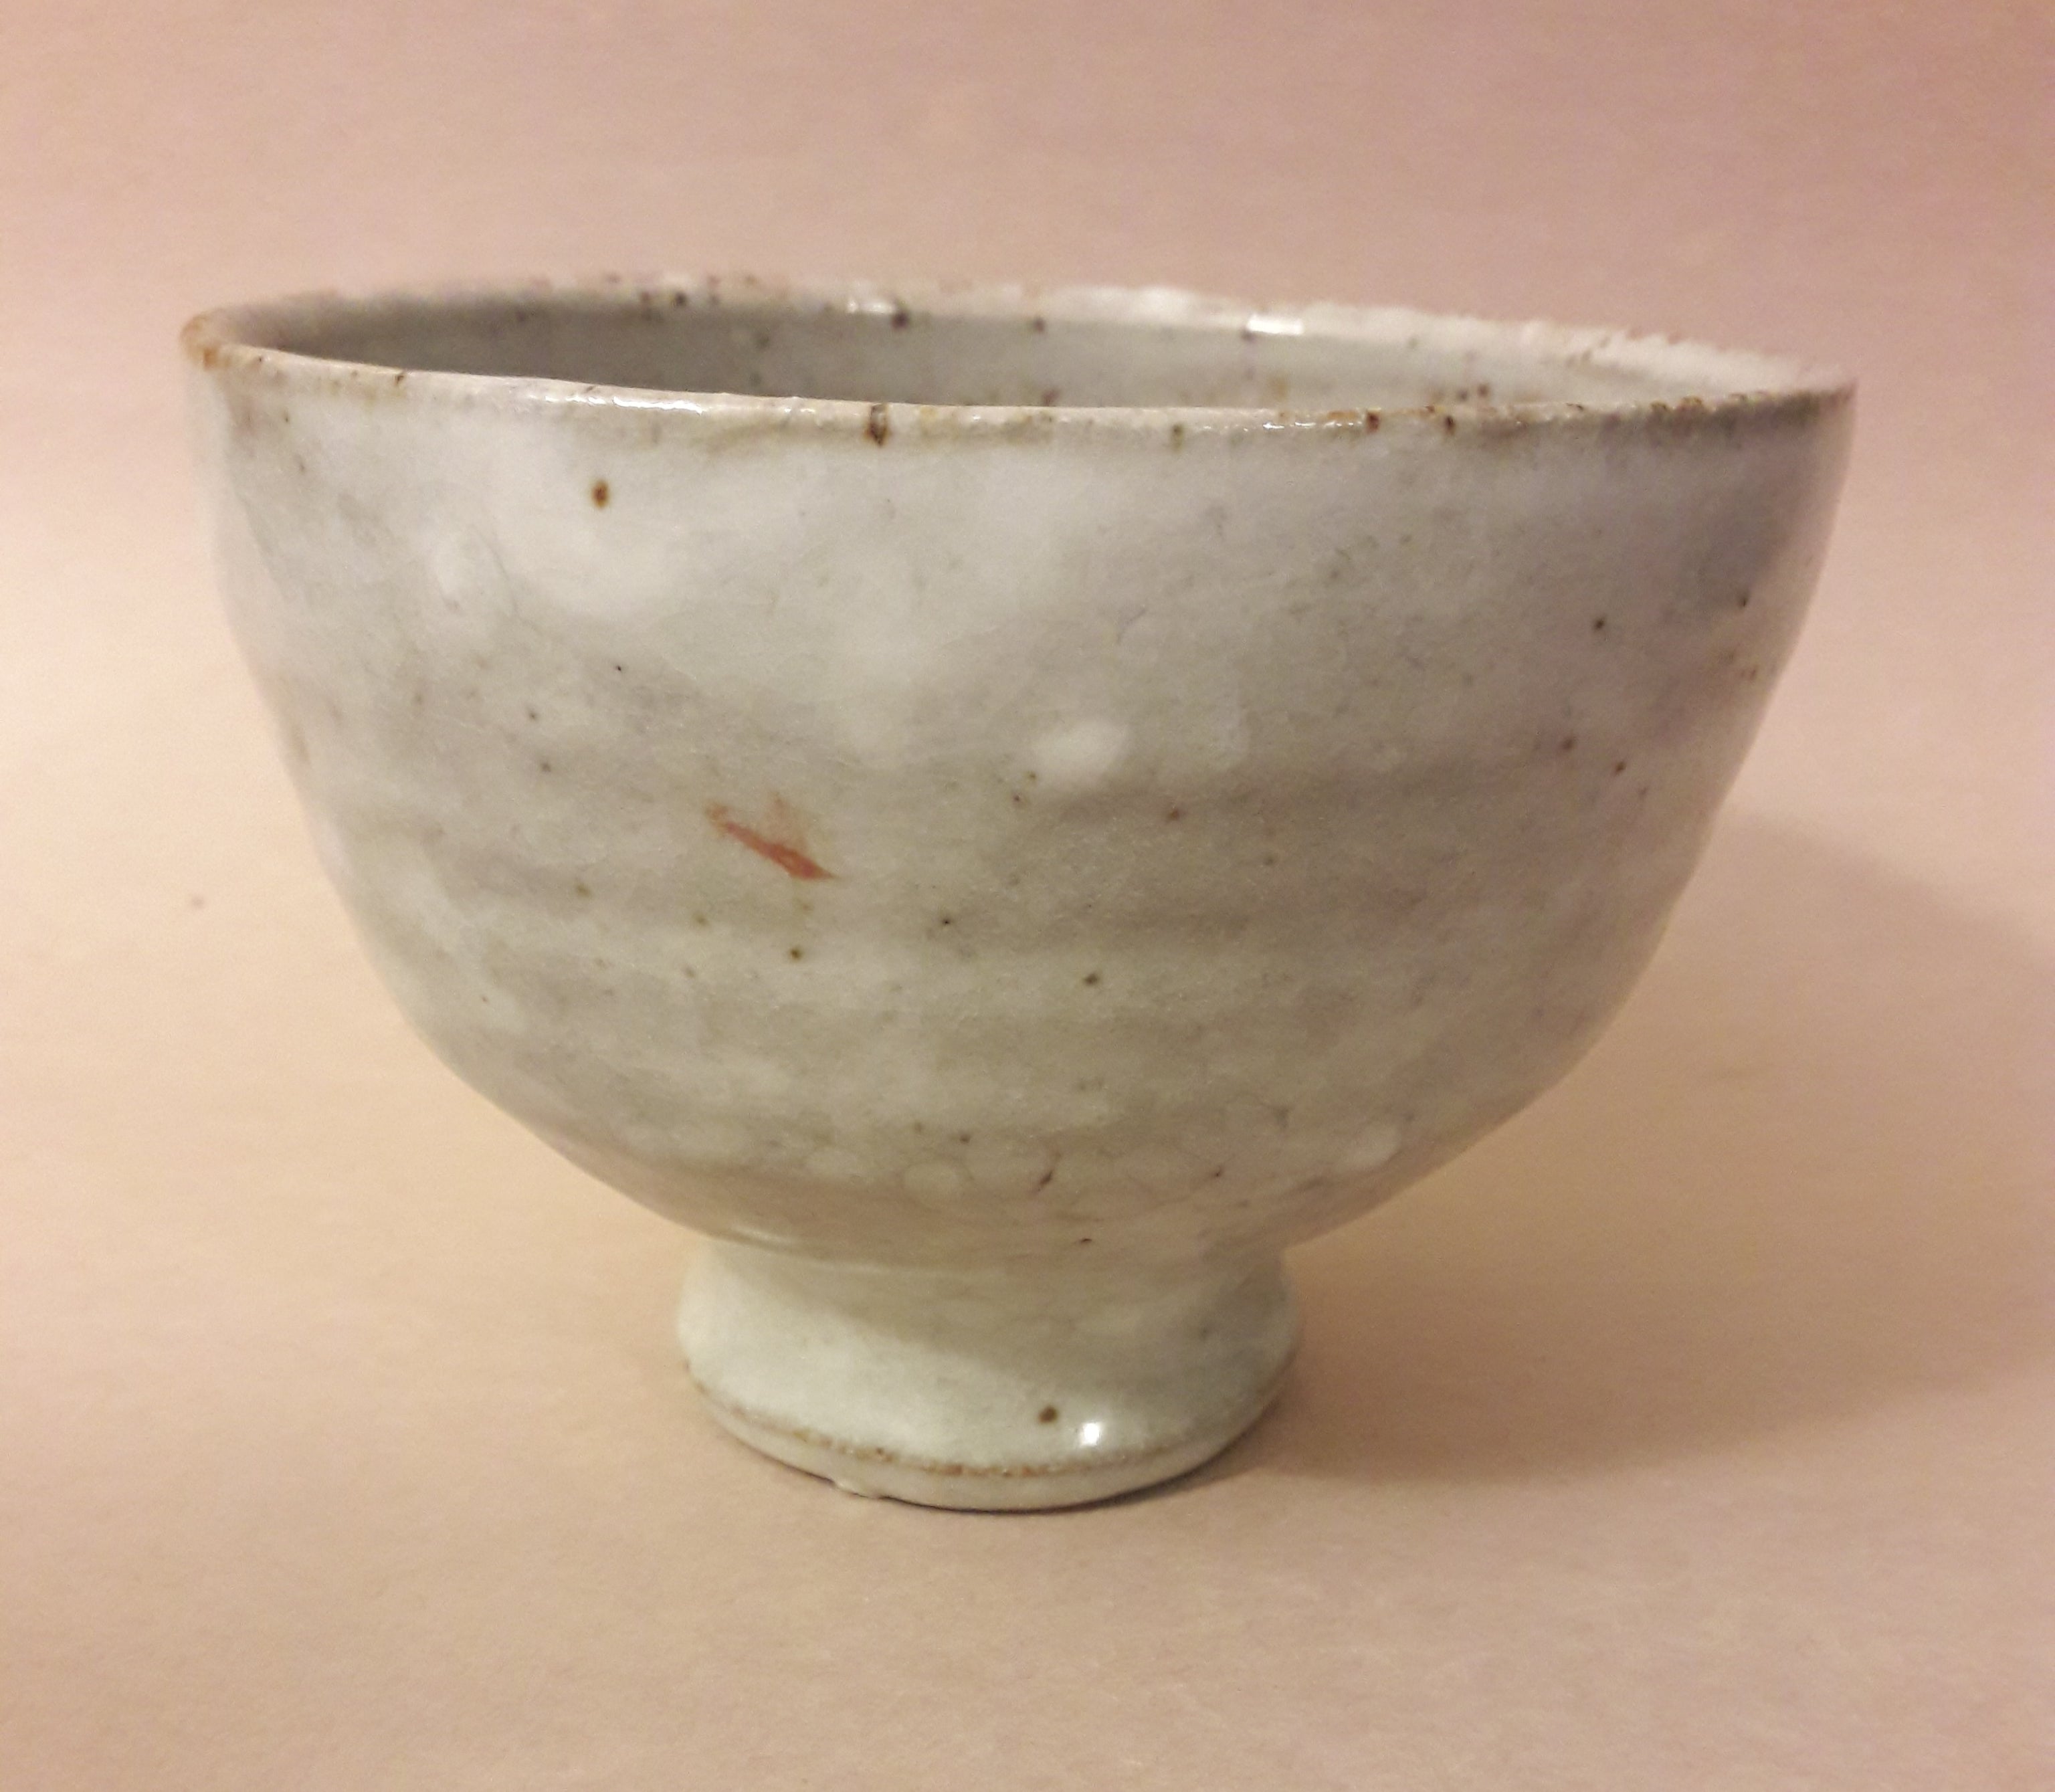 Ido-gata (well-shaped) Matcha Chawan (Tea Bowl) by Sachiko Furuya